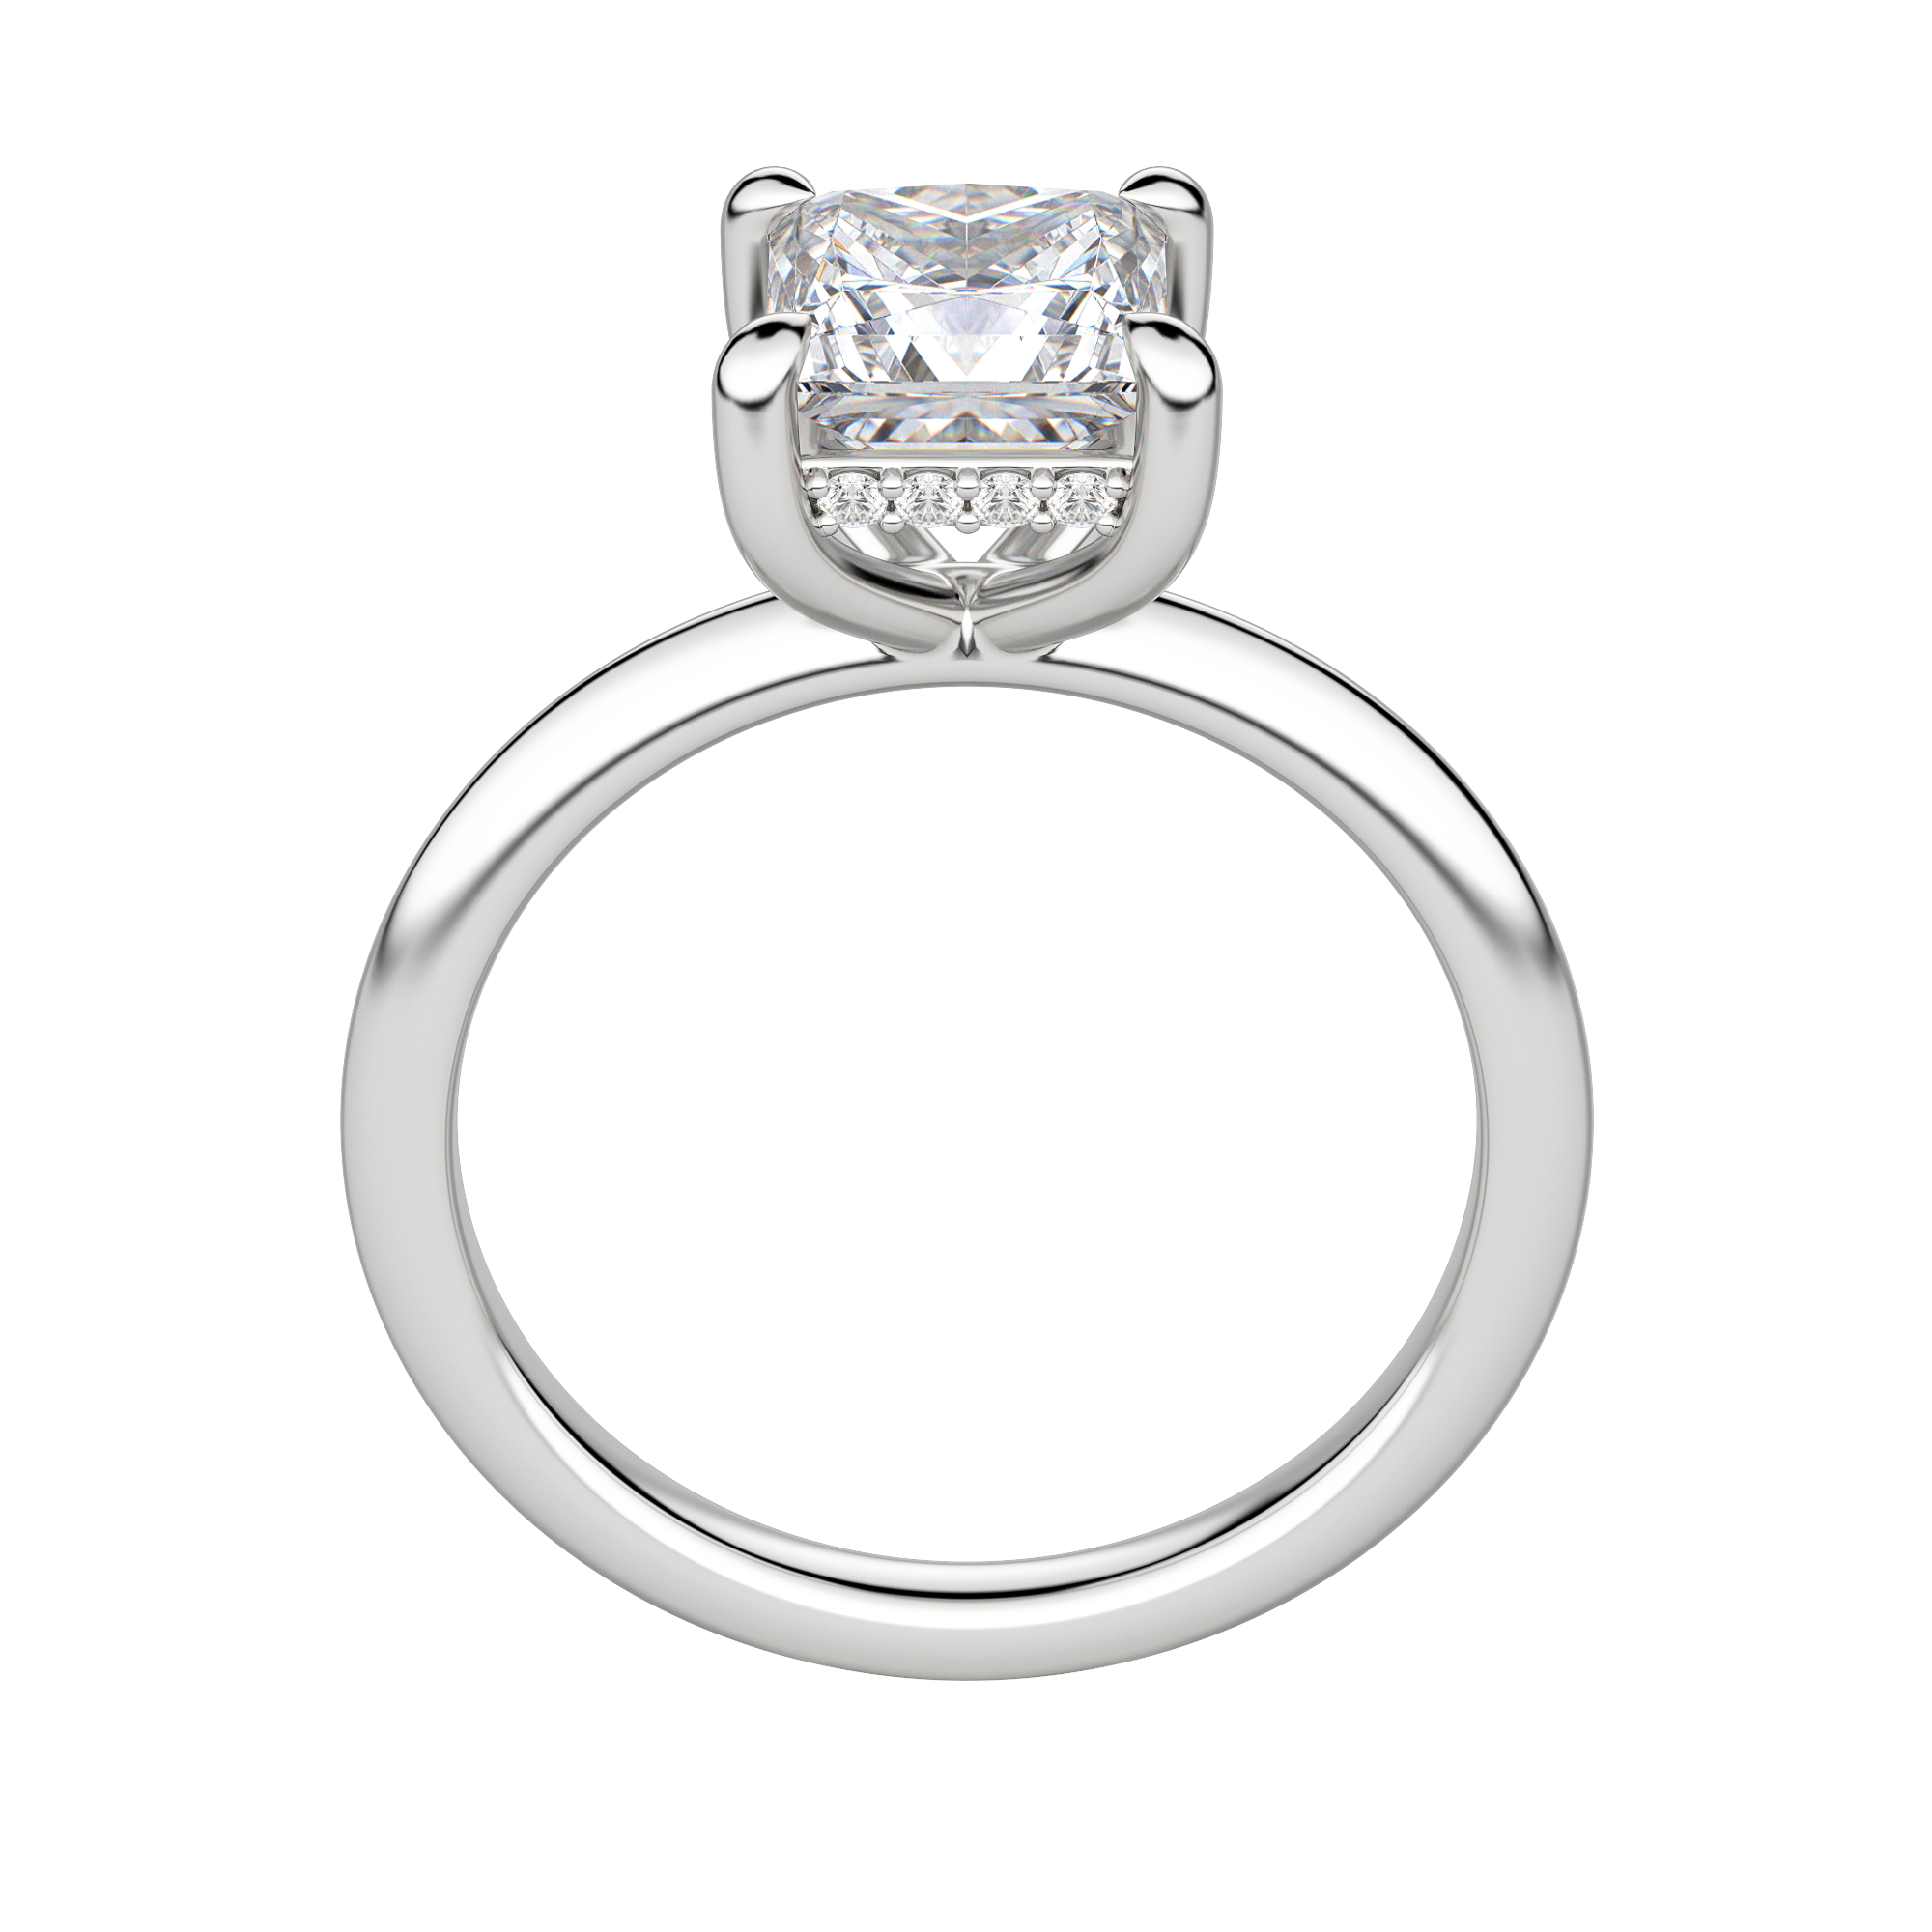 Hera Classic Princess Cut Engagement Ring, Hover, 18K White Gold, Platinum,